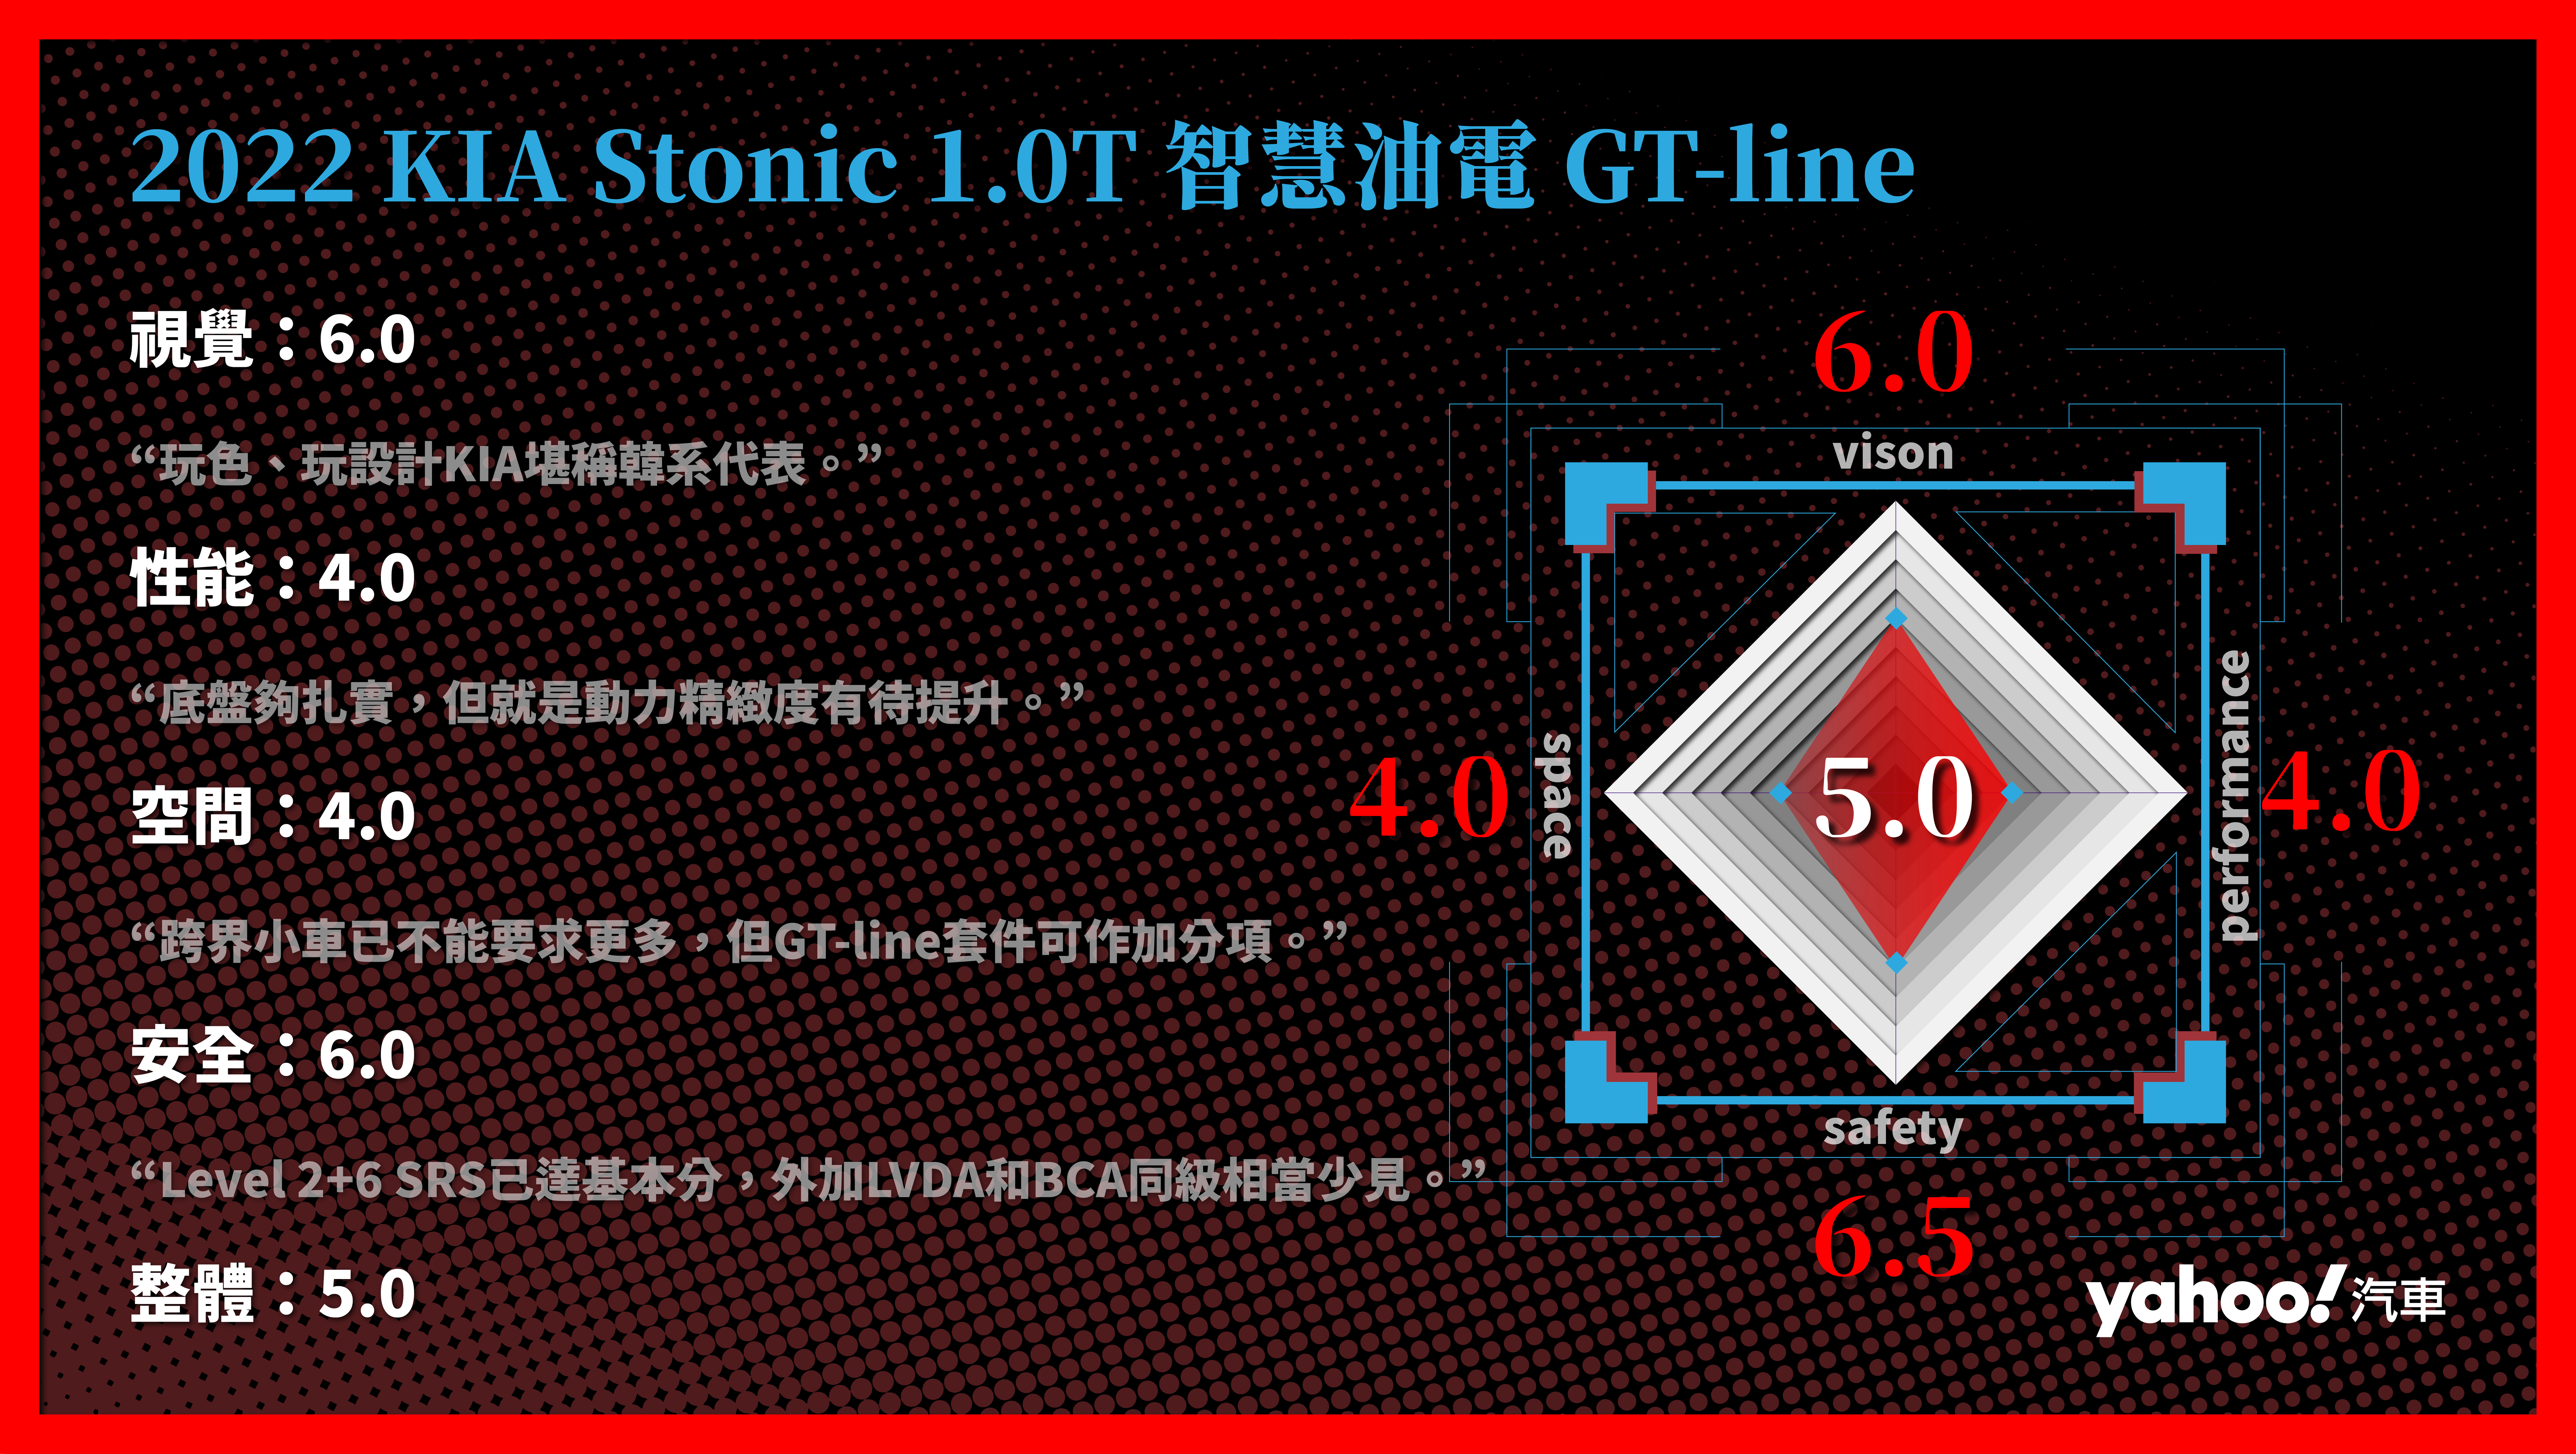 2022 KIA Stonic 1.0T智慧油電GT-line 分項評比